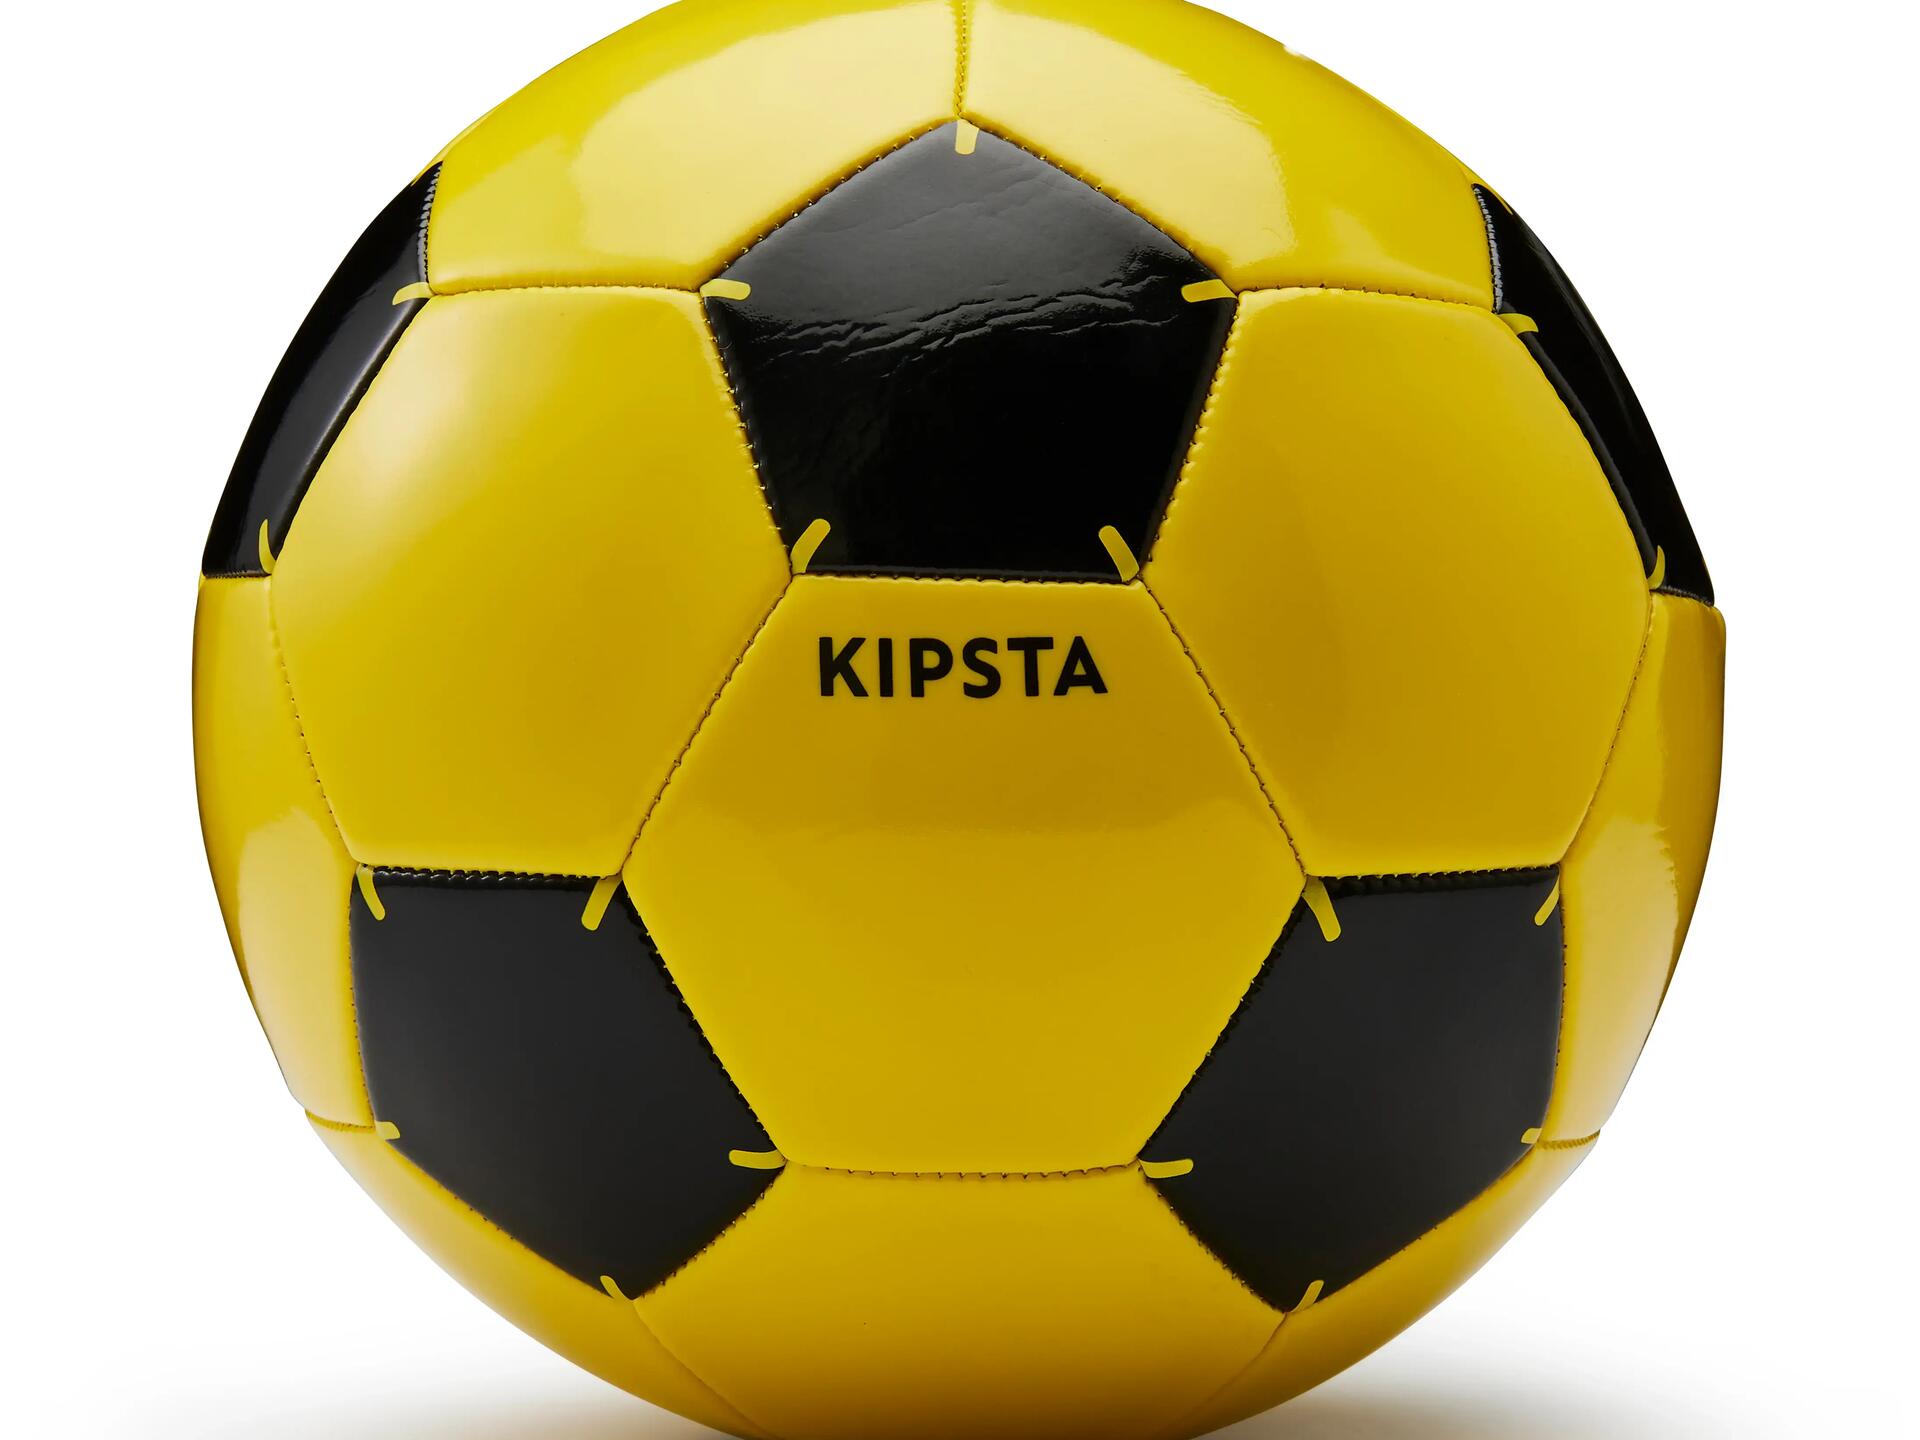 Kipsta First Kick S5